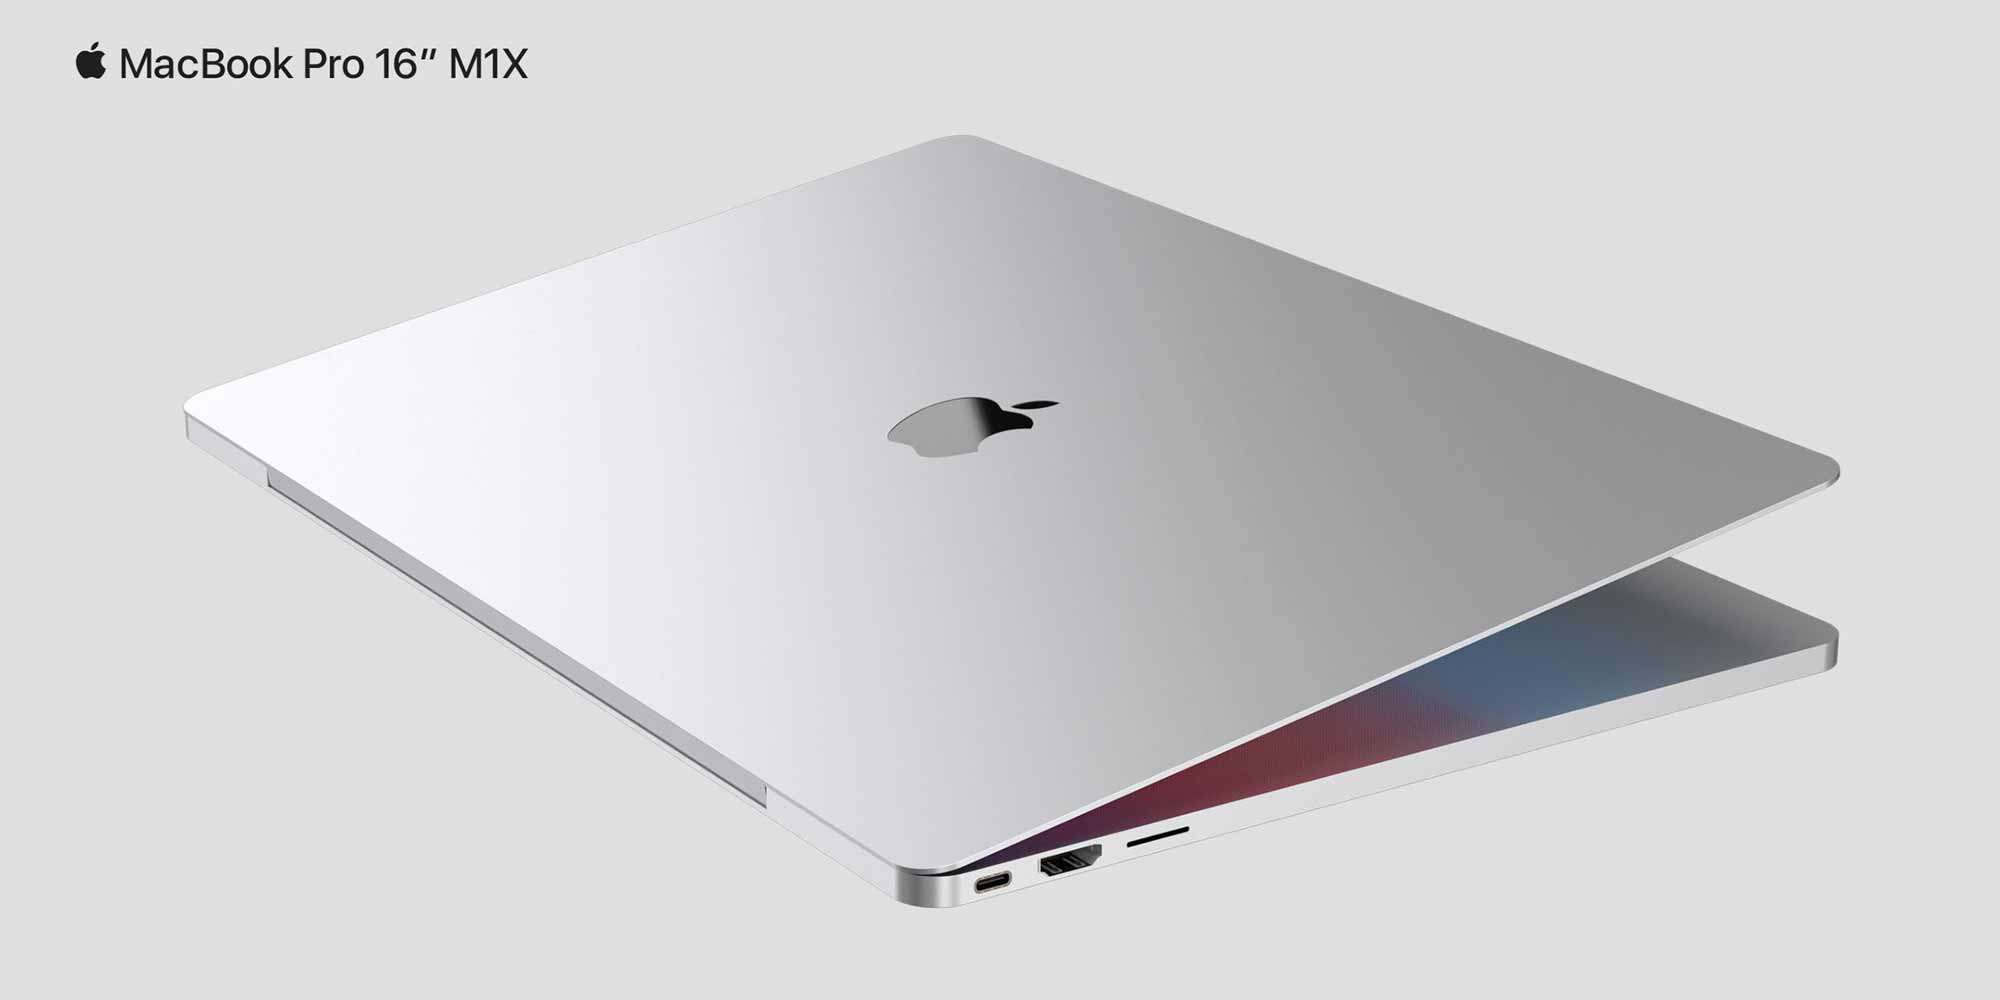 Рендеринг M1X для MacBook Pro 16 дюймов